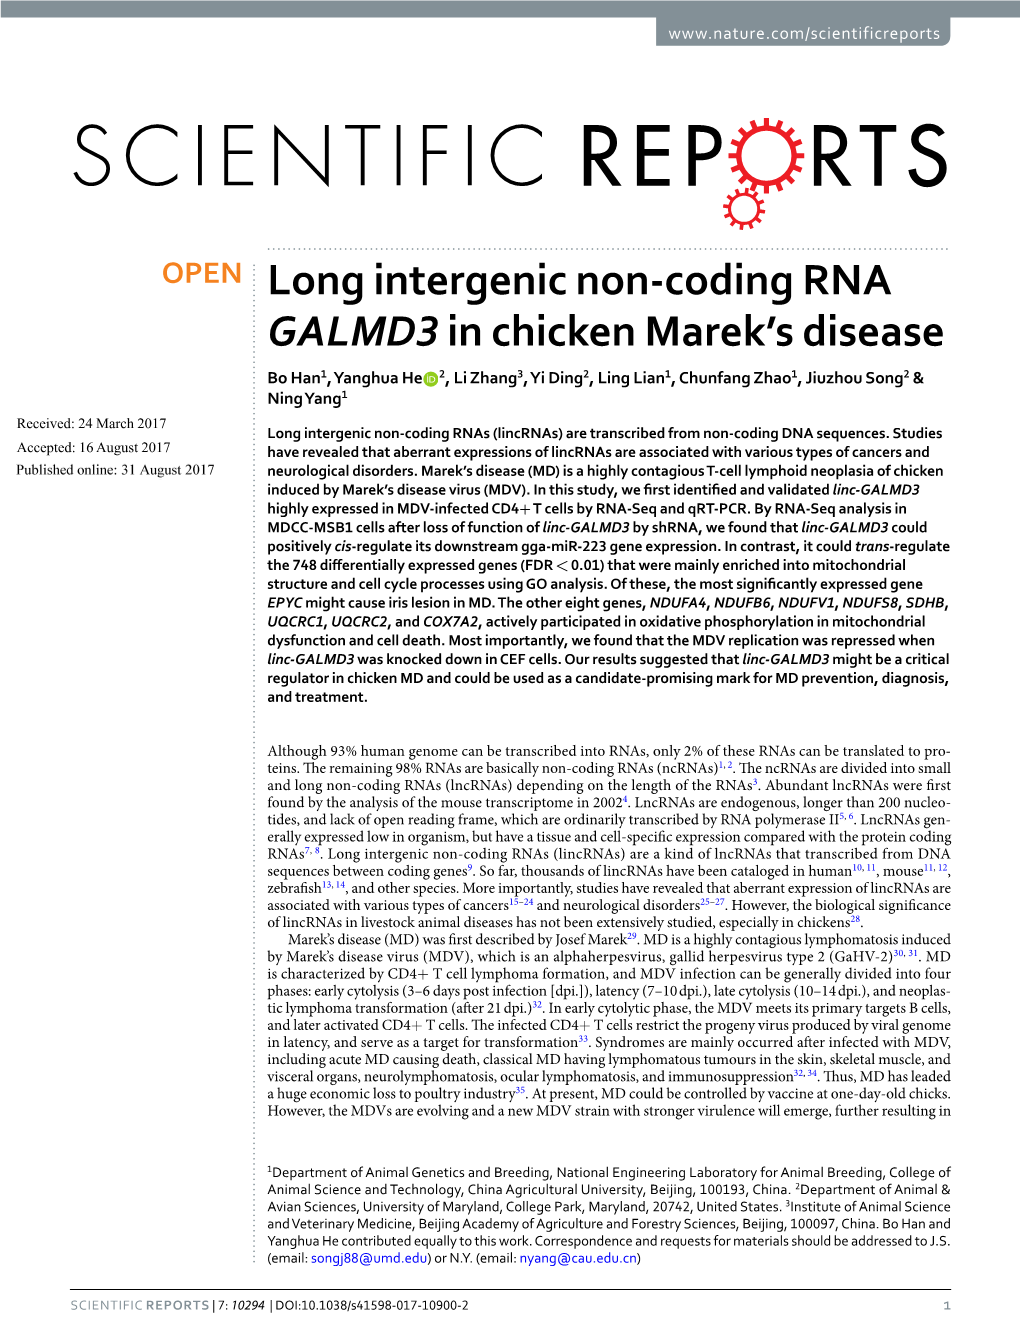 Long Intergenic Non-Coding RNA GALMD3 in Chicken Marek's Disease